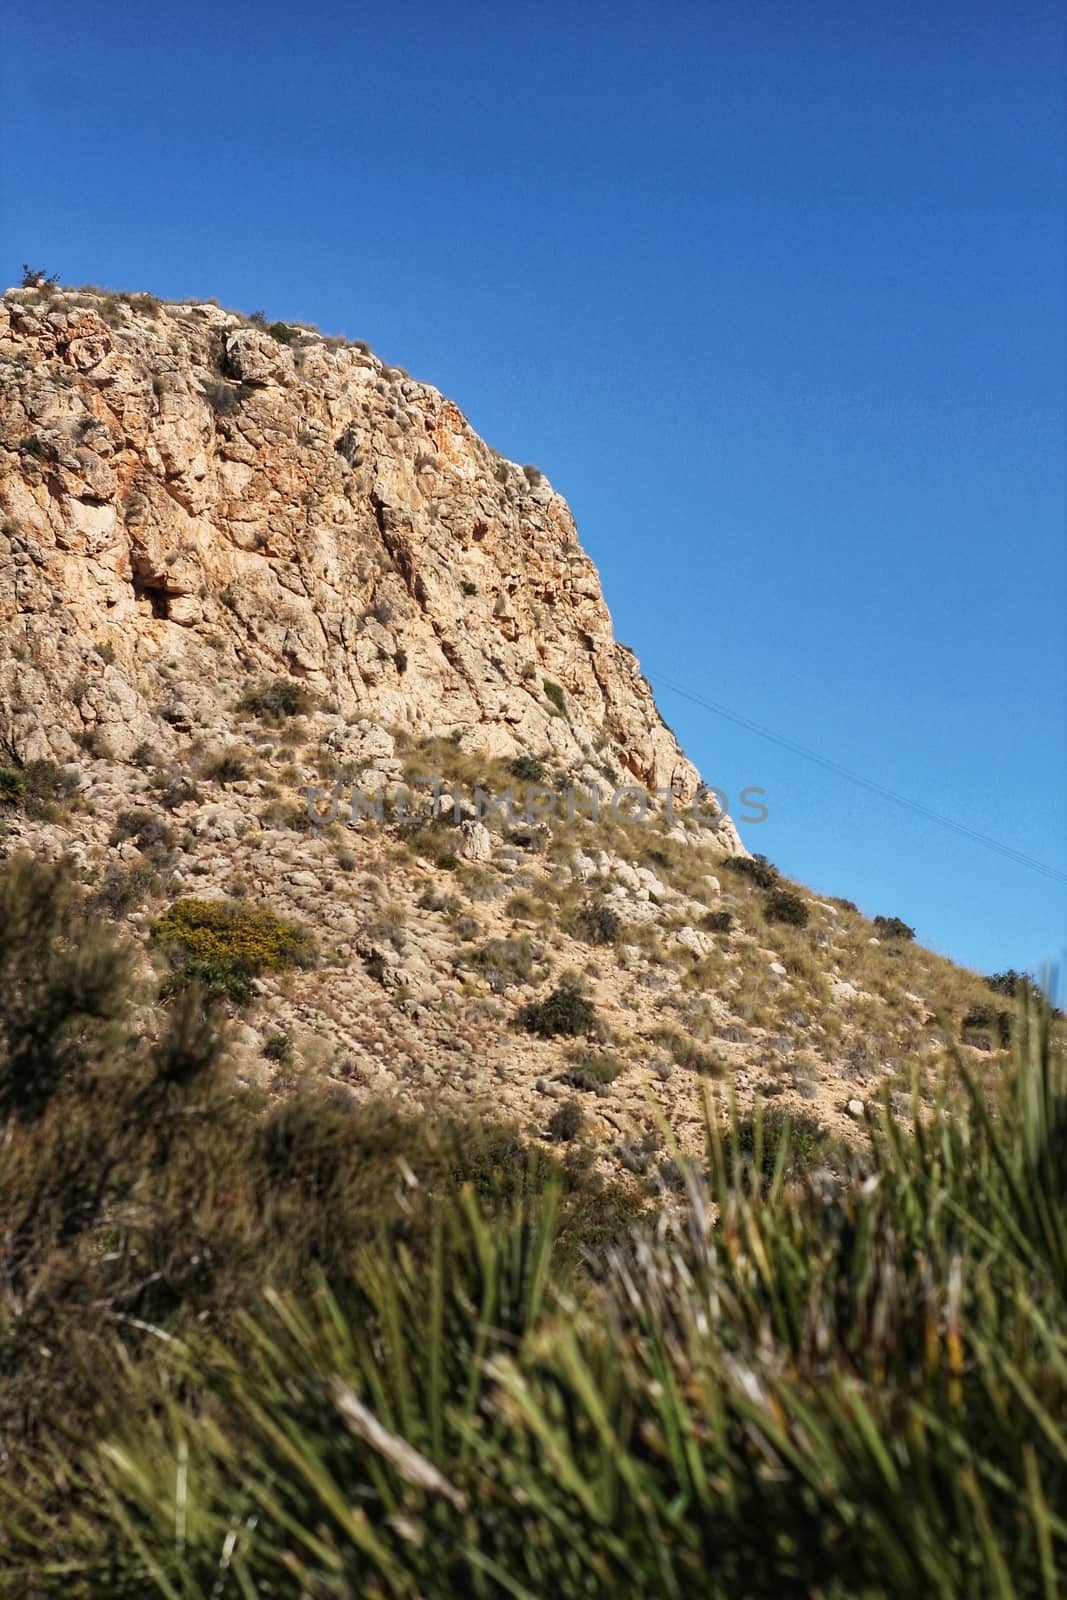 Vegetation in cliffs of the Alicante coast by soniabonet